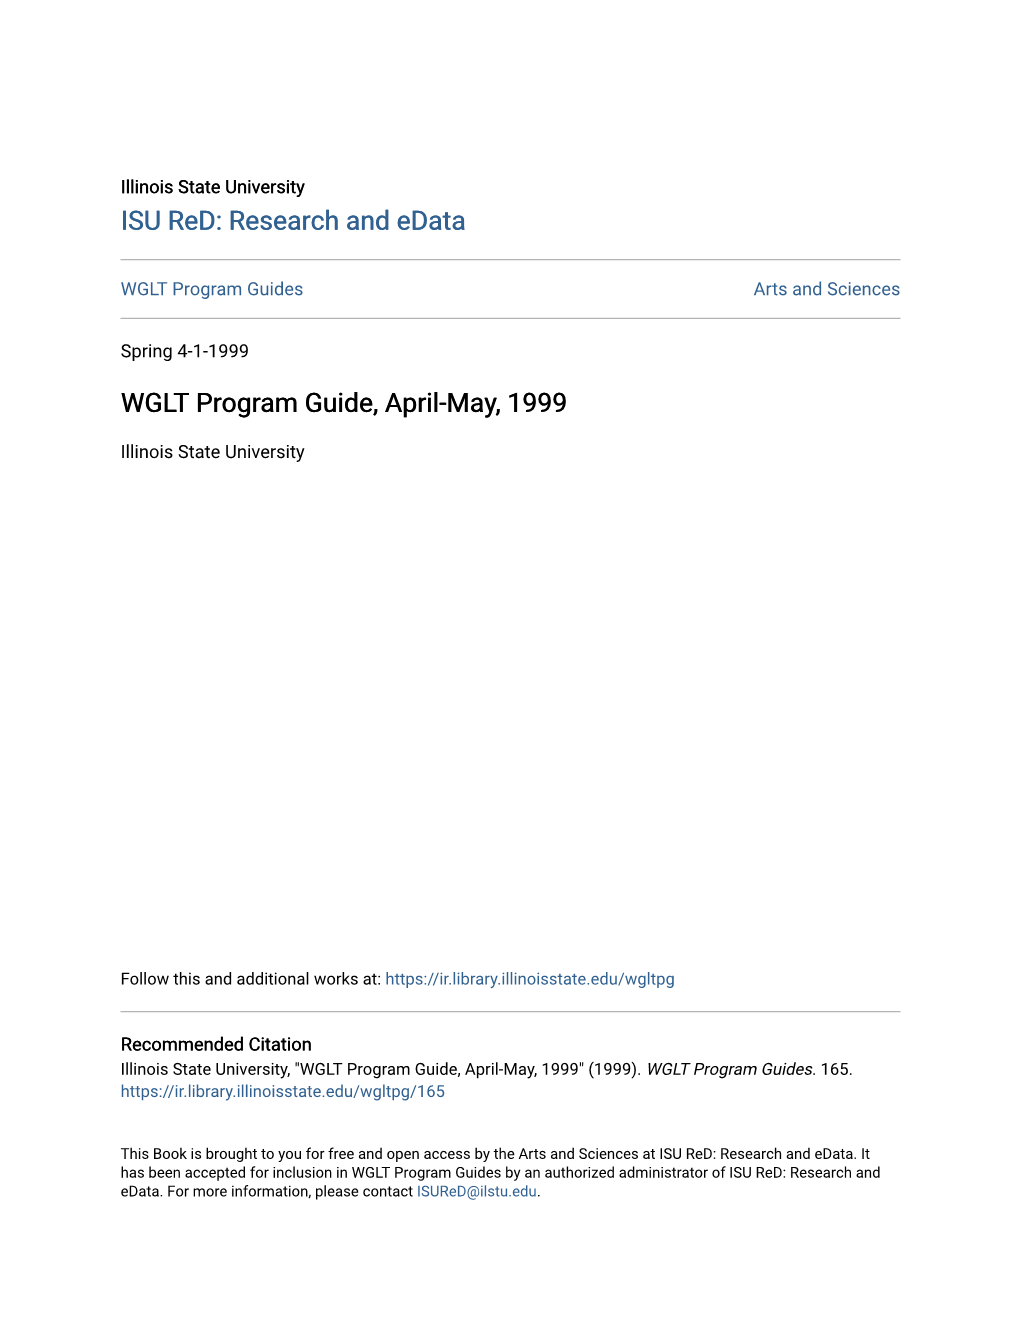 WGLT Program Guide, April-May, 1999